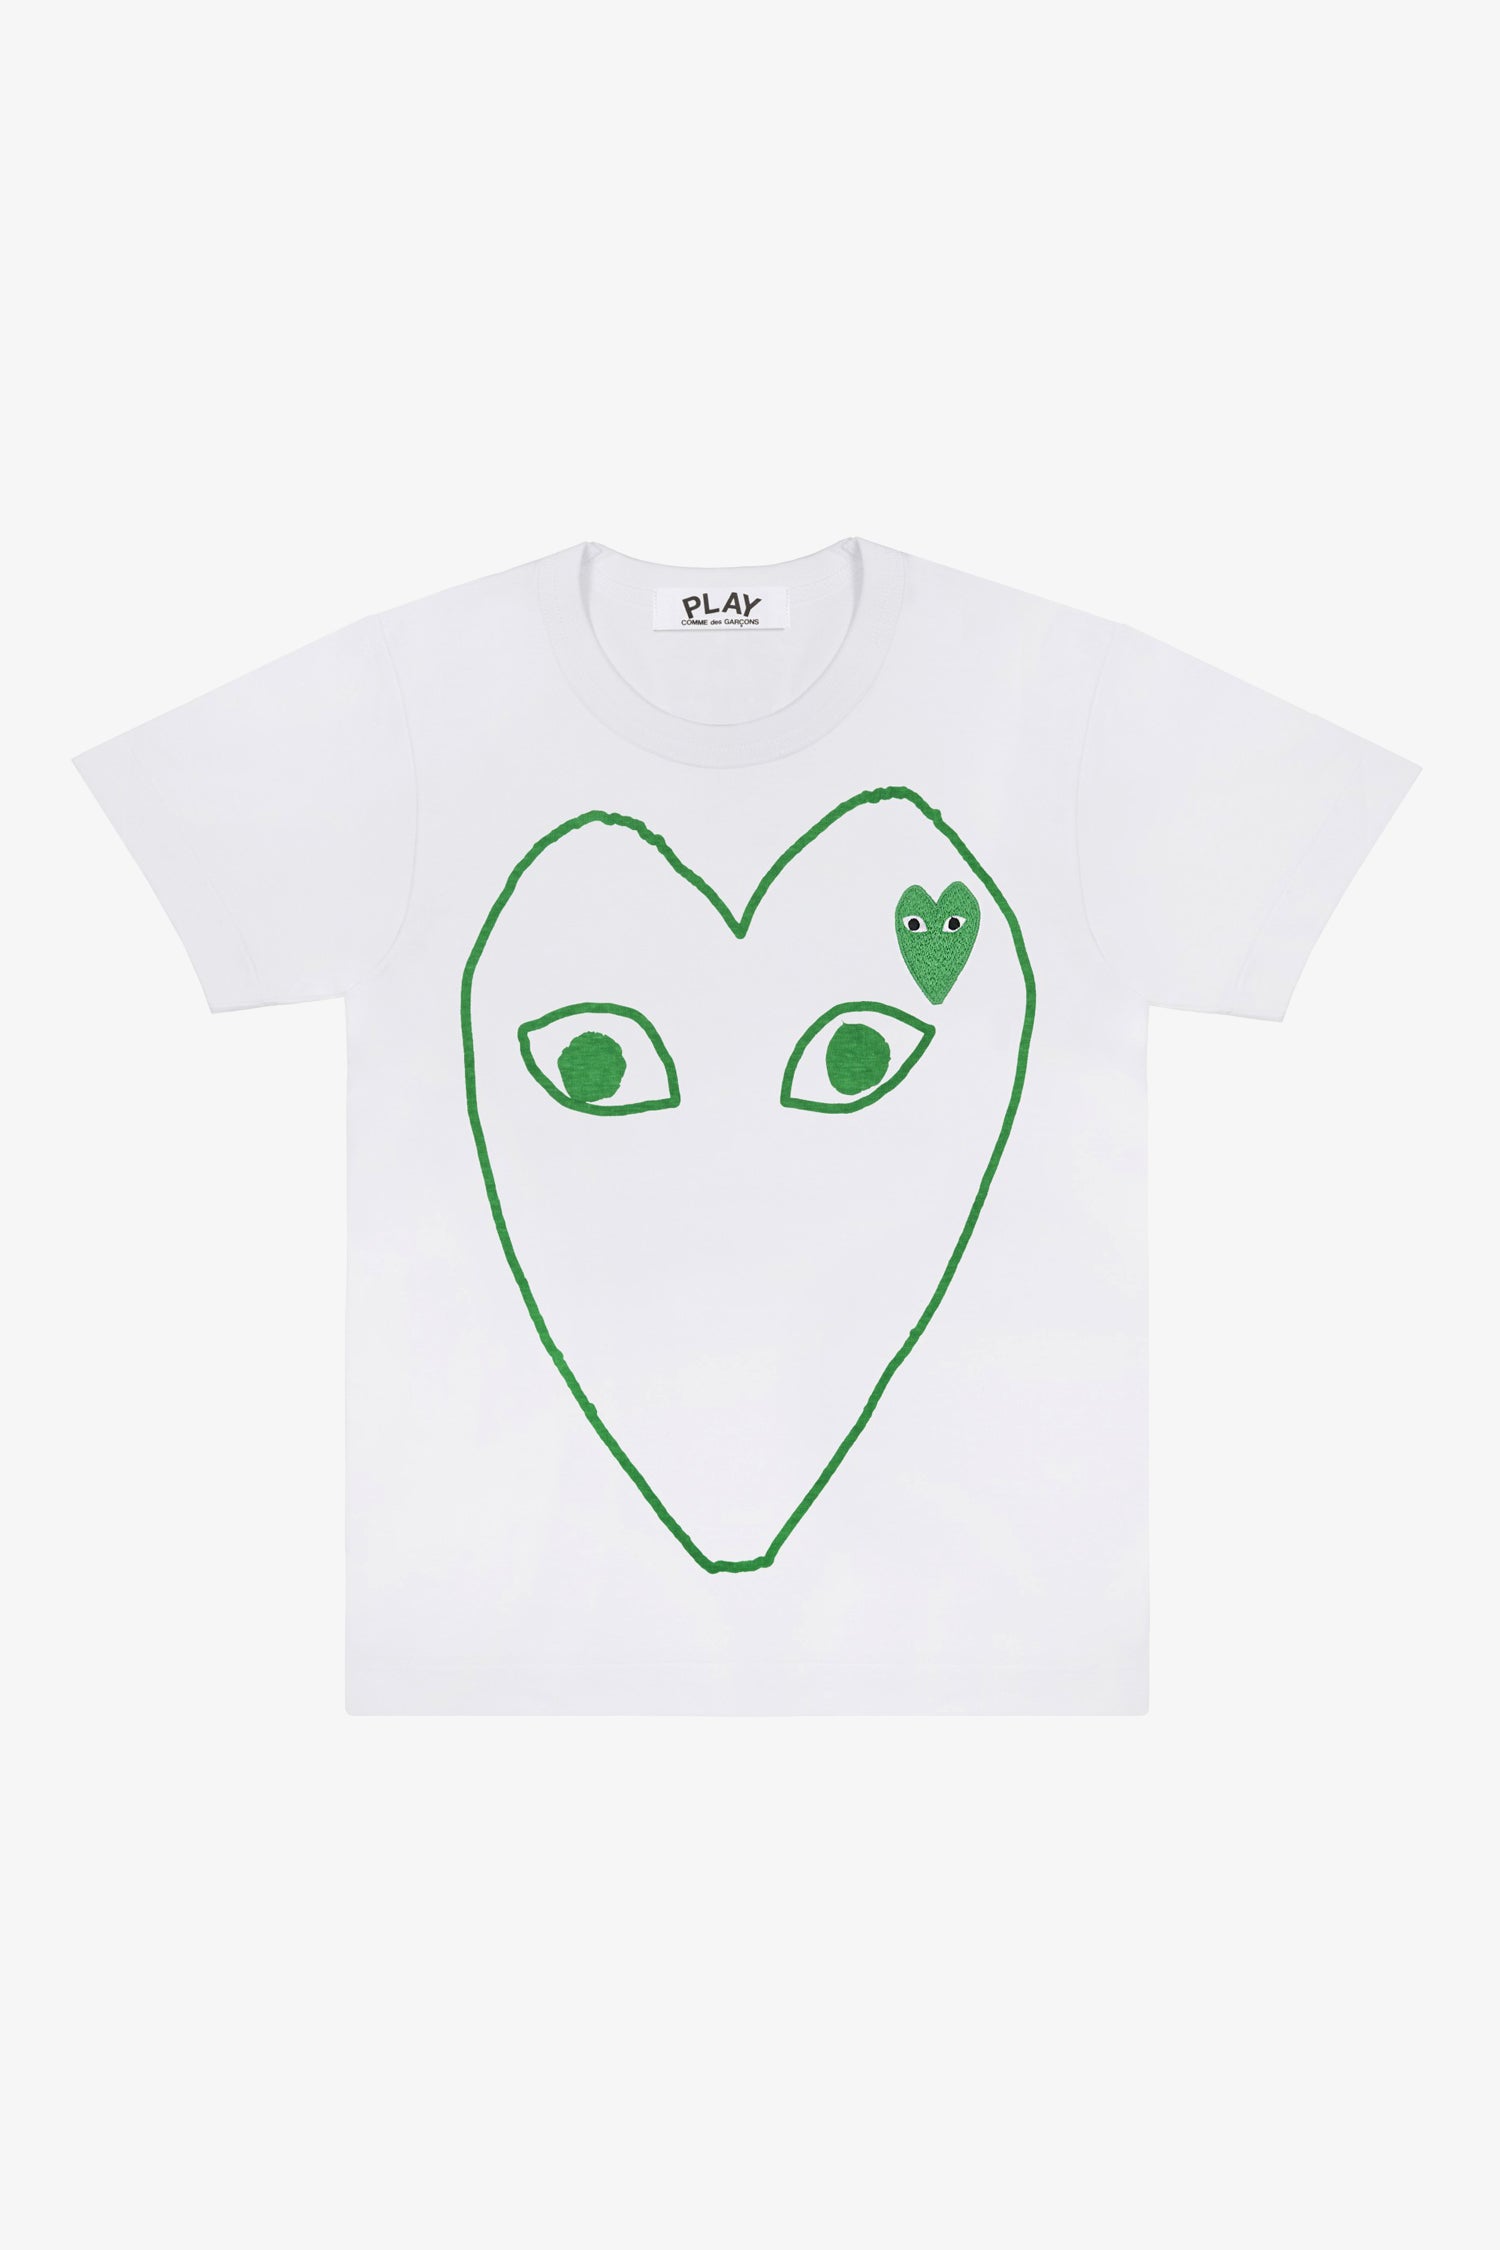 Selectshop FRAME - COMME DES GARCONS PLAY Empty Long Green Heart T-Shirt T-Shirt Dubai